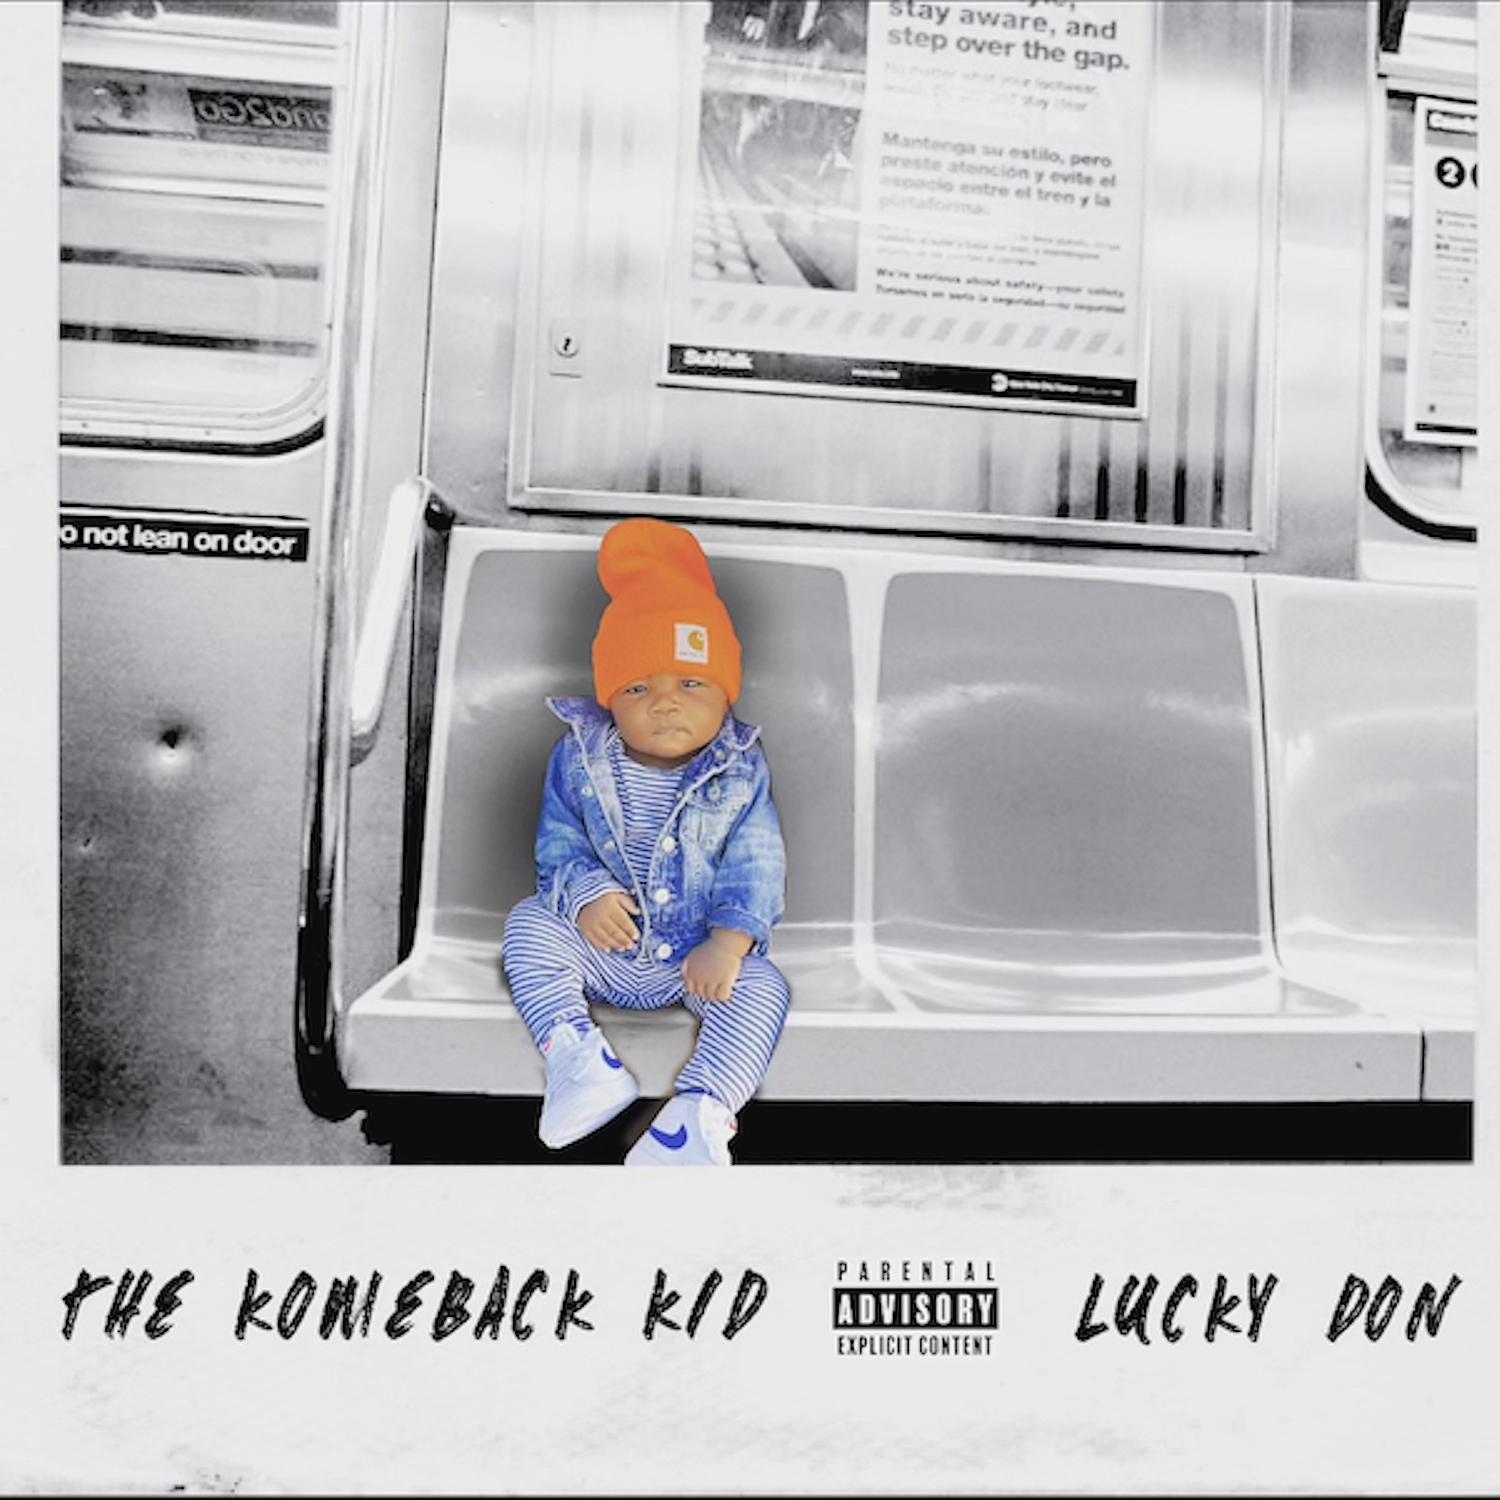 Lucky Don - Komeback Kid